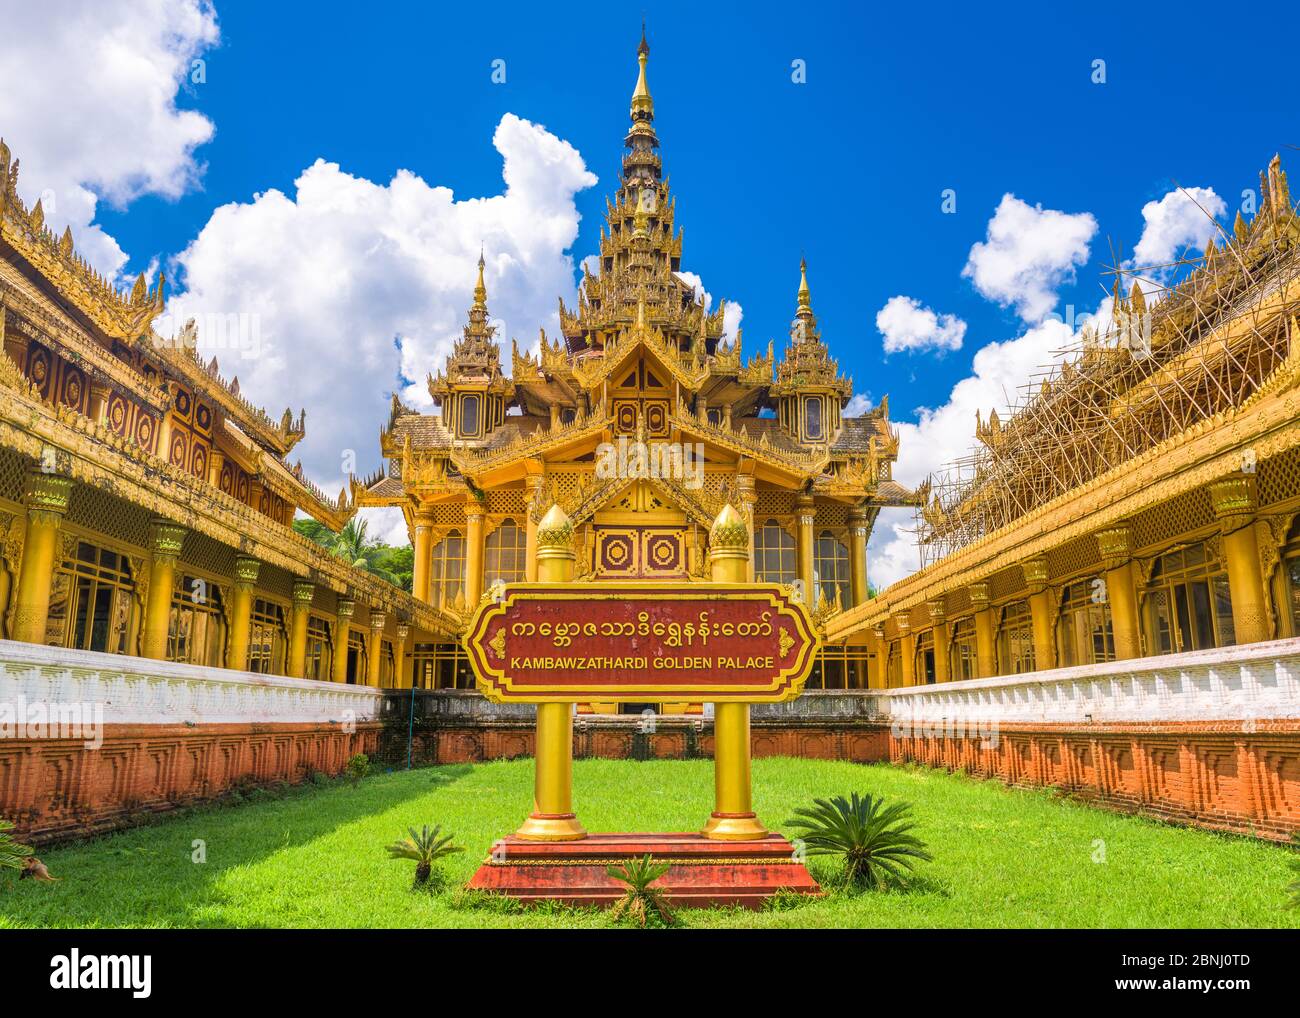 Bago, Myanmar im historischen Kambawzathardi Golden Palace. Stockfoto